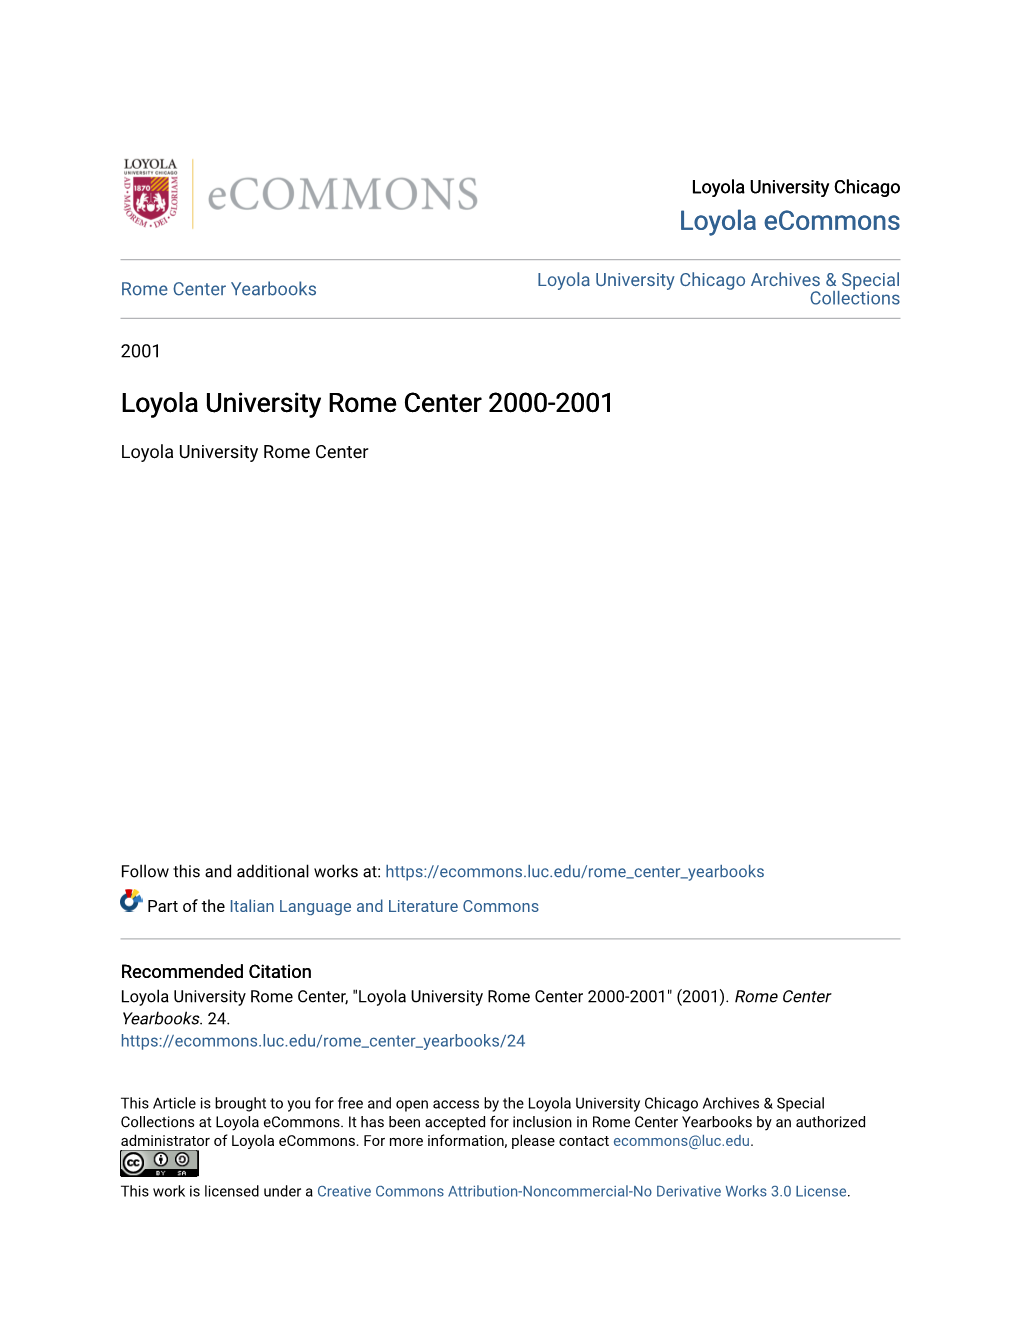 Loyola University Rome Center 2000-2001